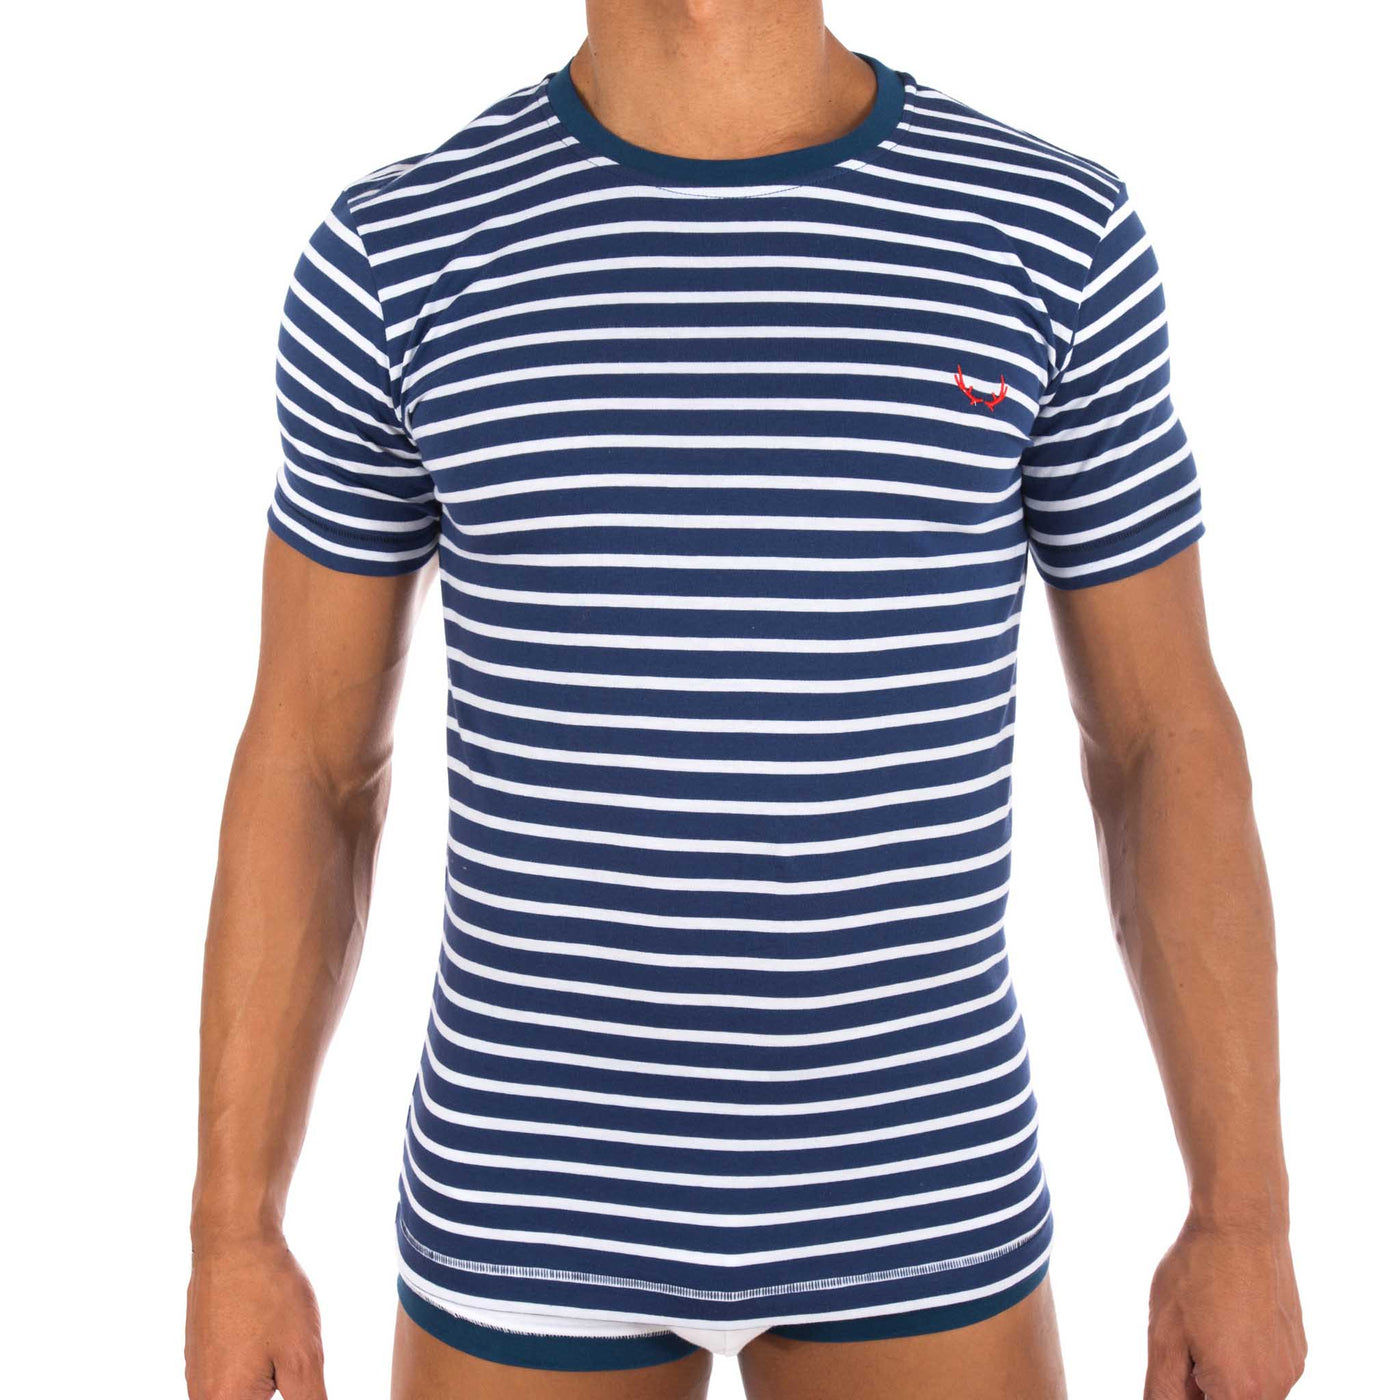 Navy organic cotton t-shirt for men - white stripes